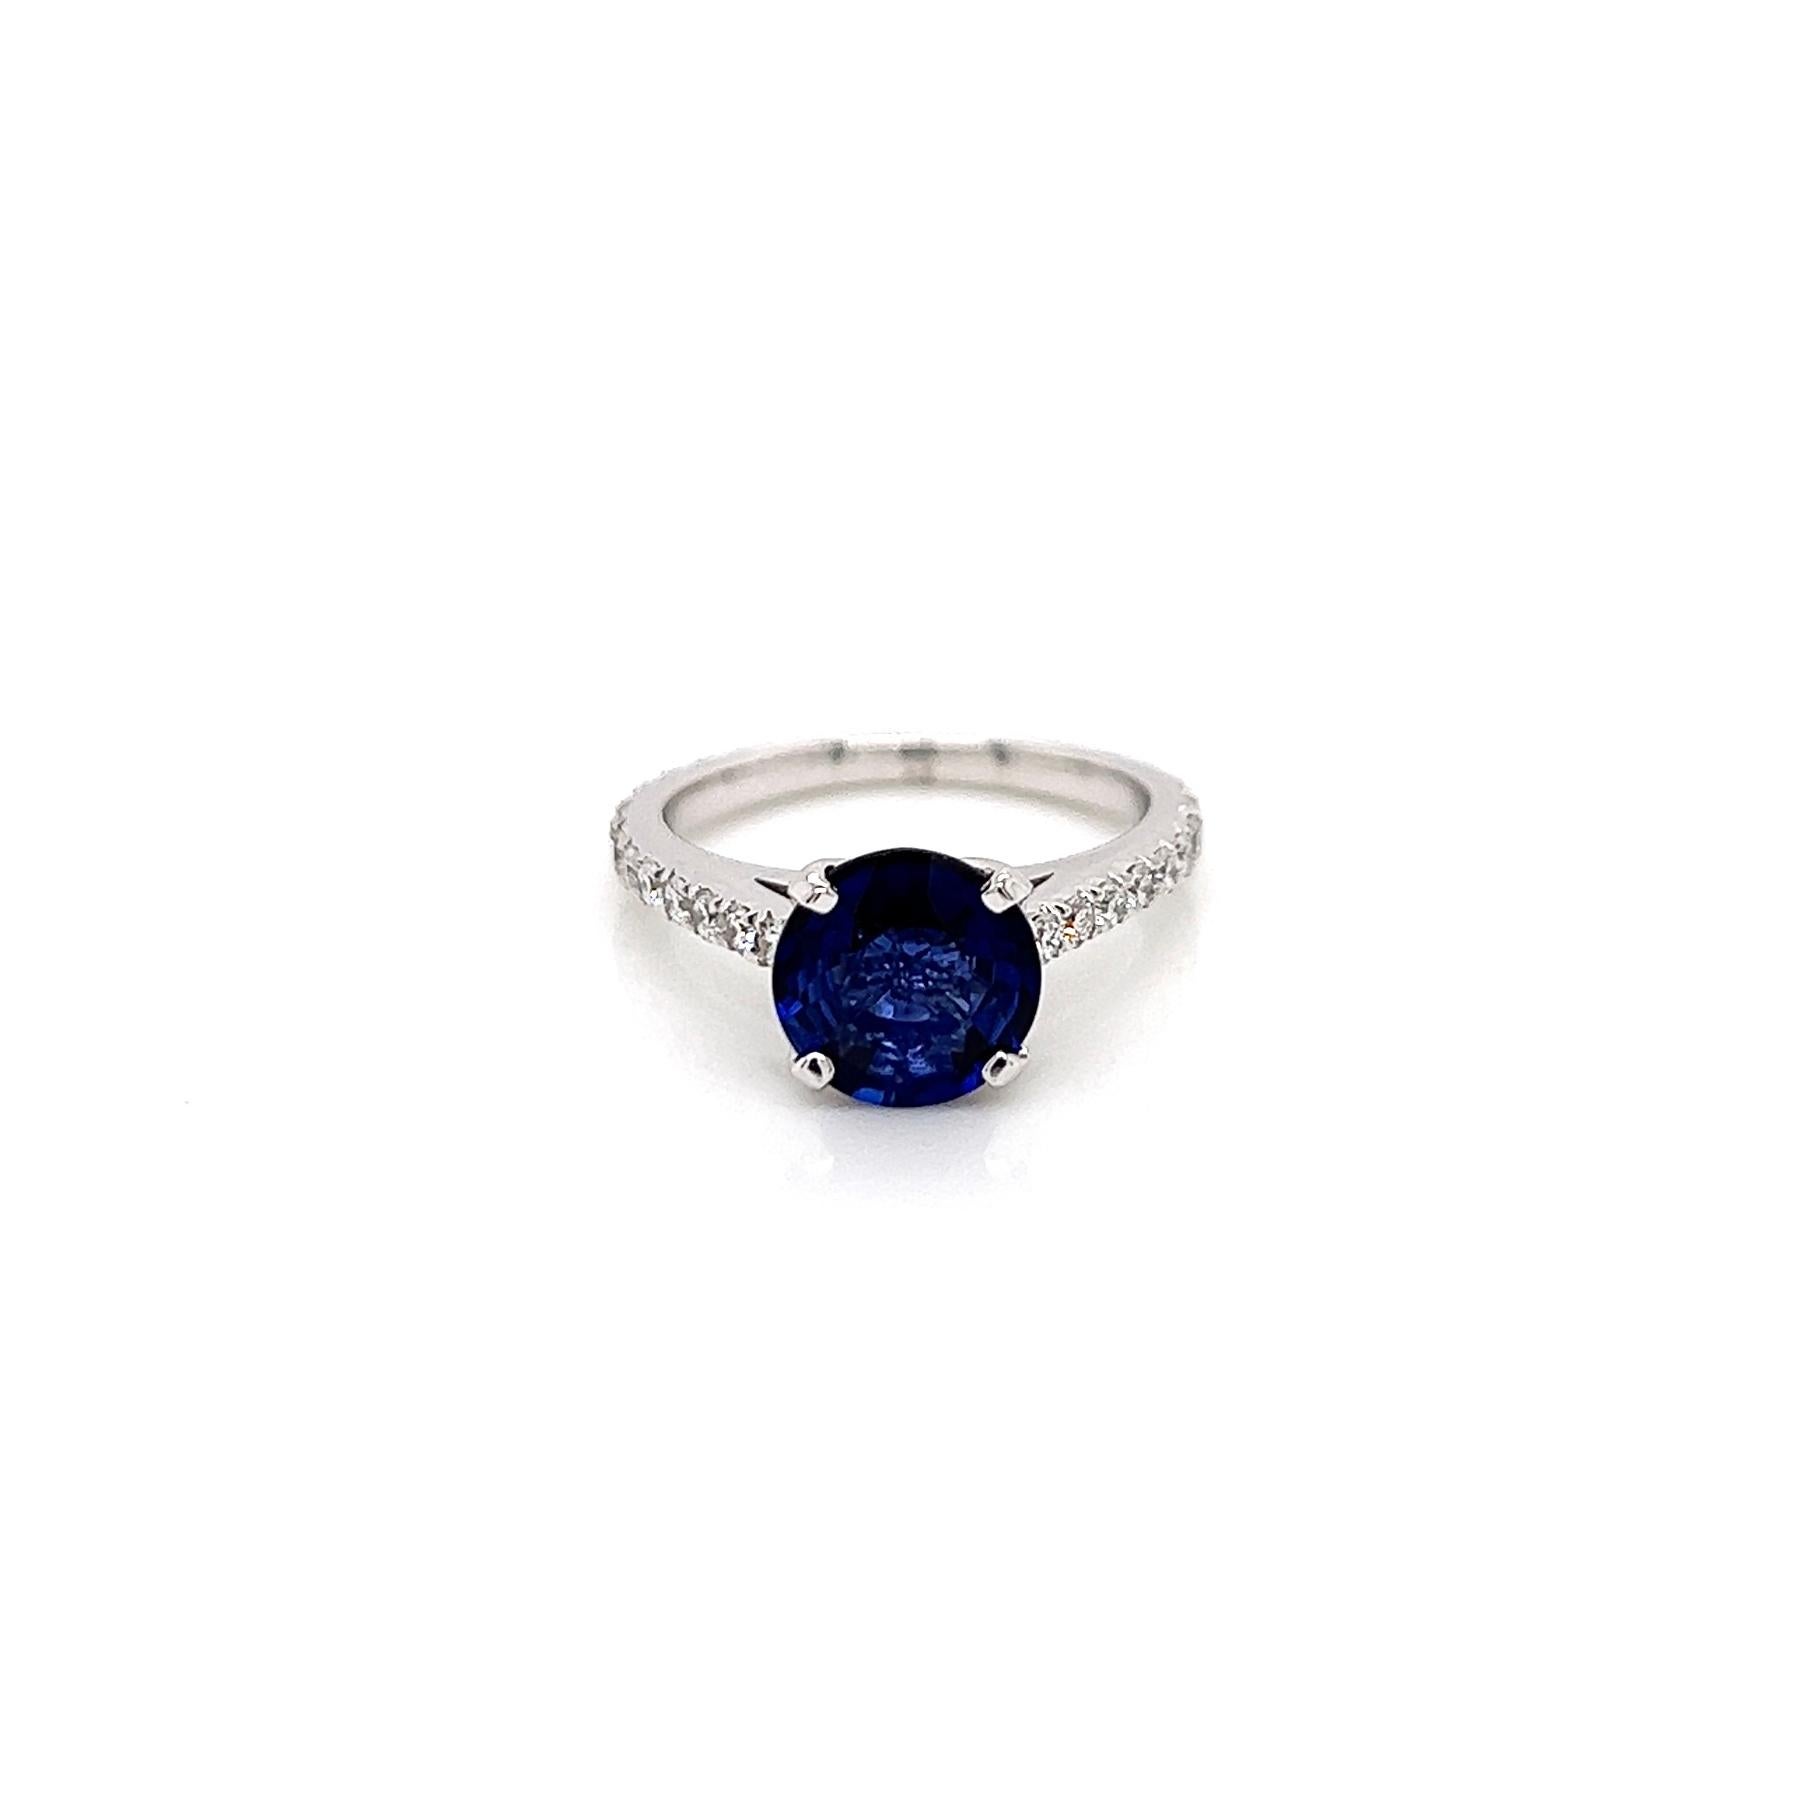 2.51Carat Sapphire Diamond Engagement Ring

-Metal Type: 18K White Gold
-2.01Carat Round Blue Sapphire
-0.50Carat Round Side Natural Diamonds
-Size 4.0

Made in New York City